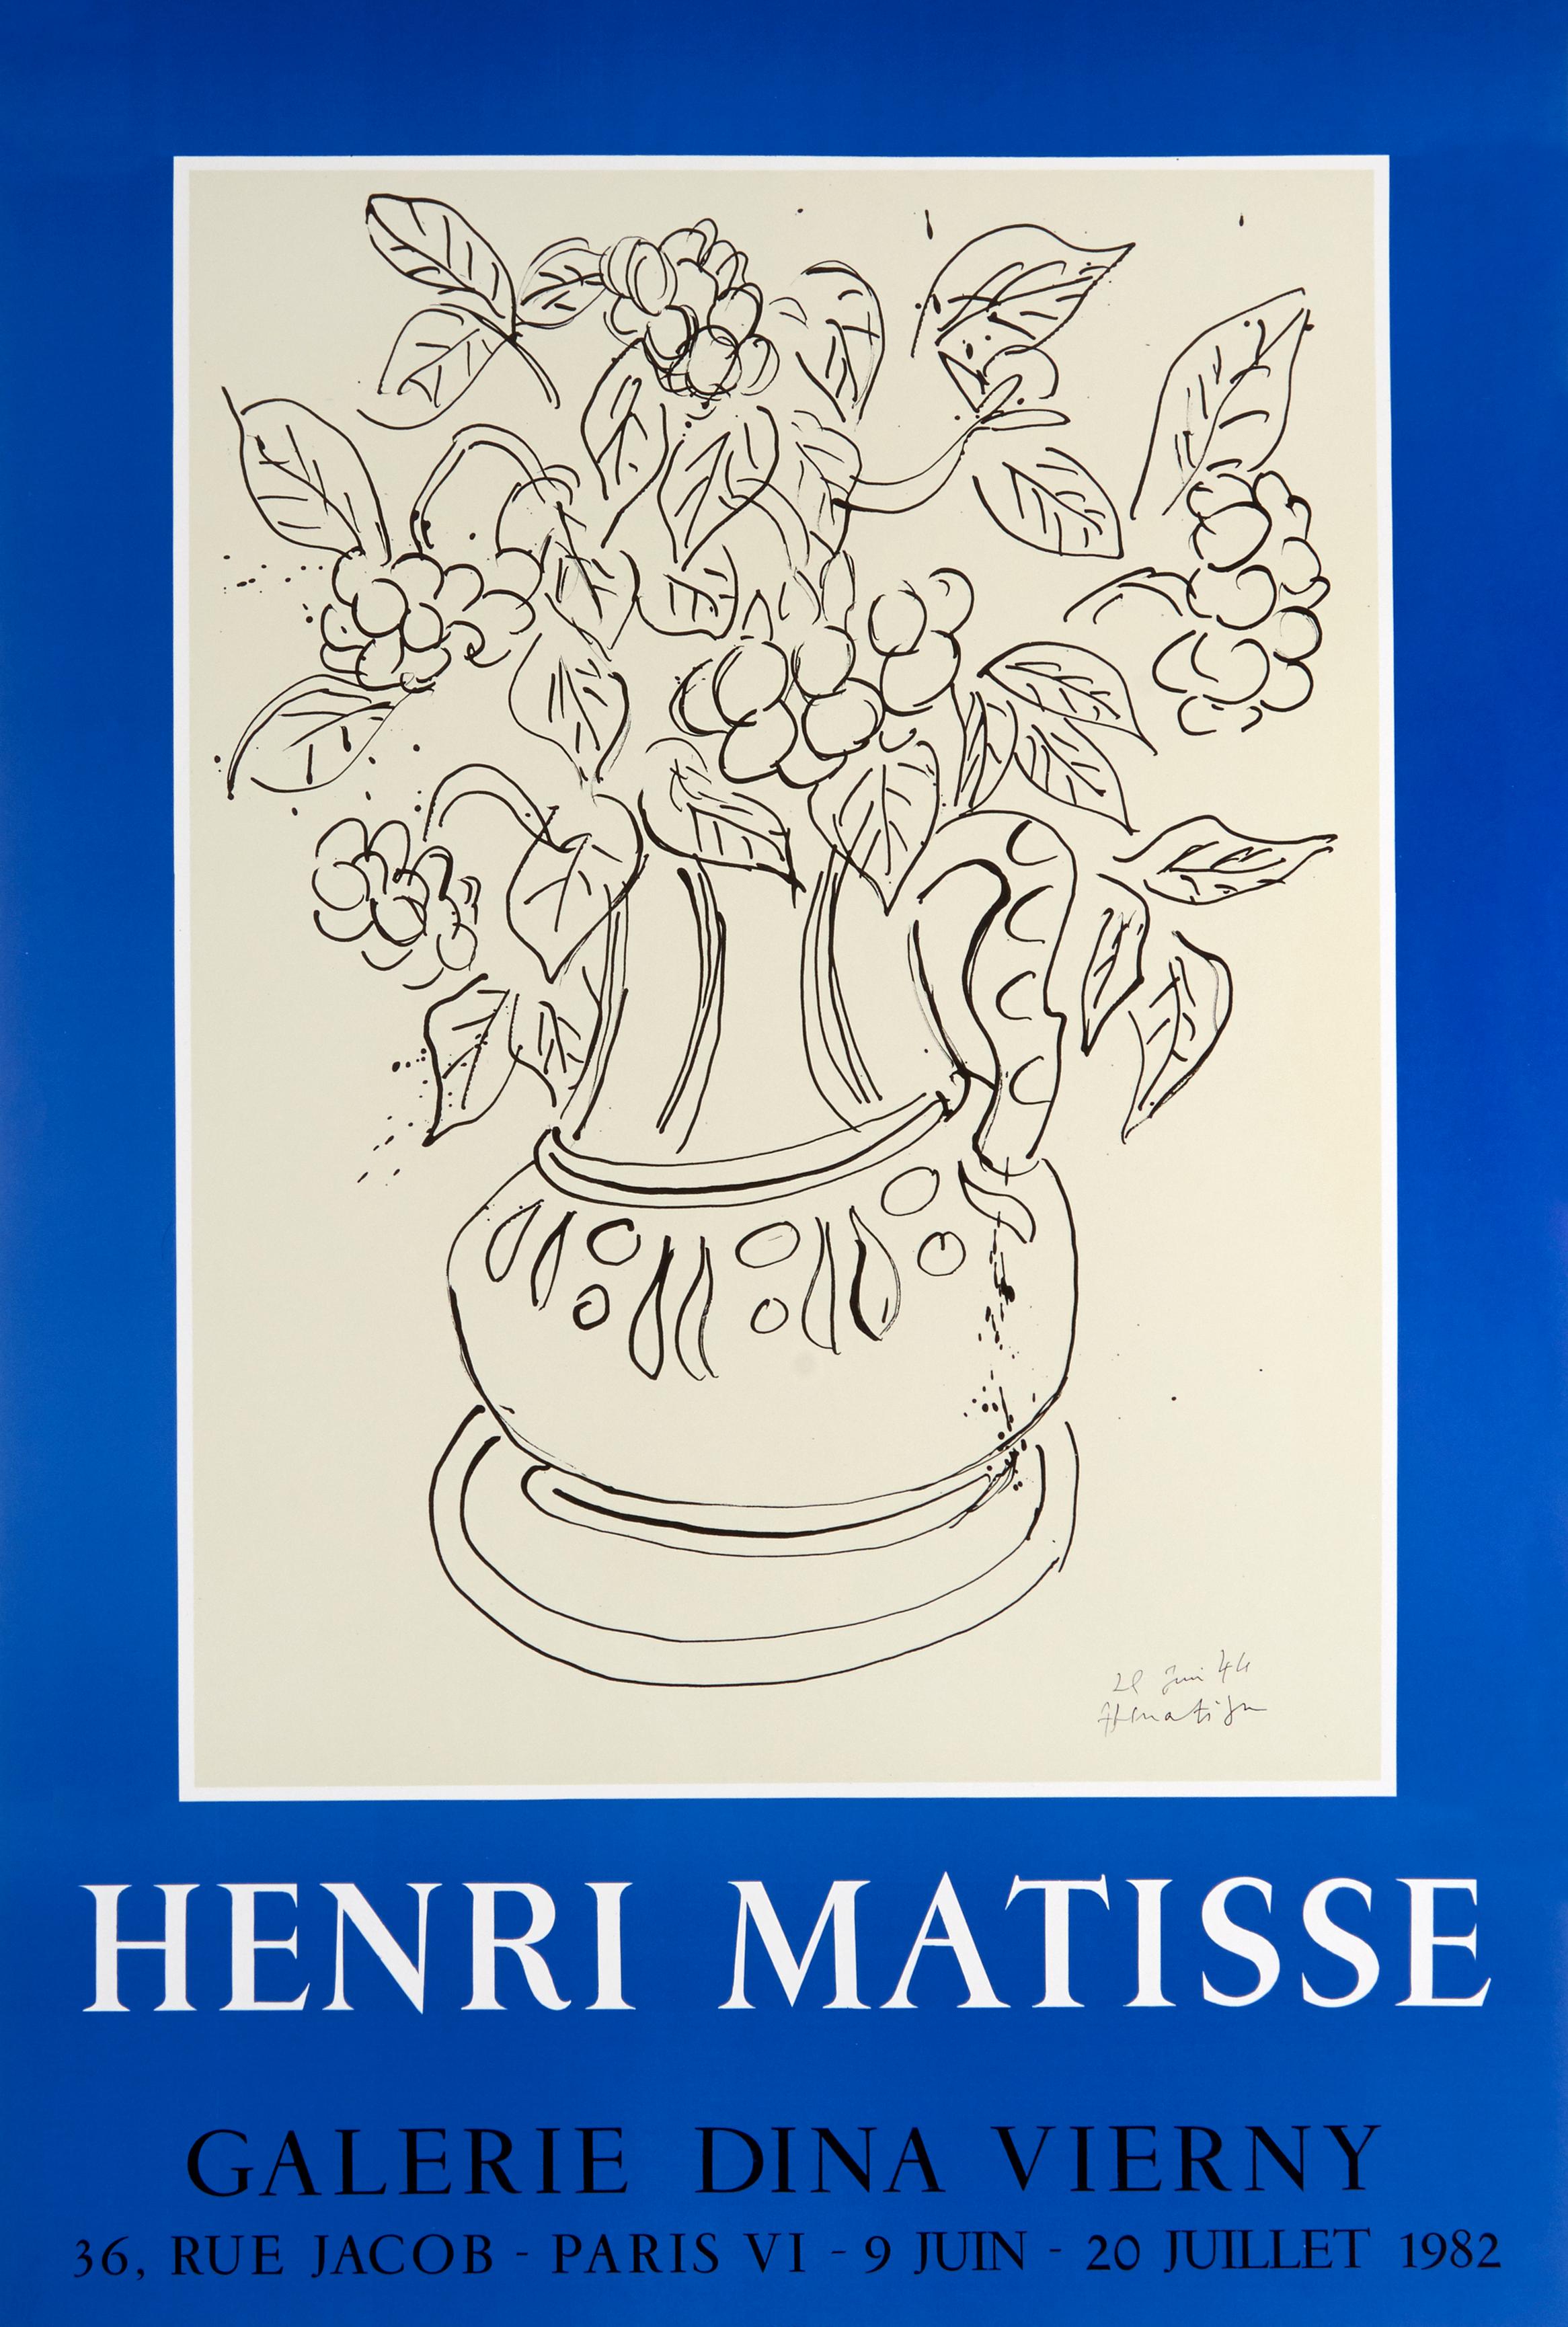 Galerie Dina Vierny after Henri Matisse, 1982